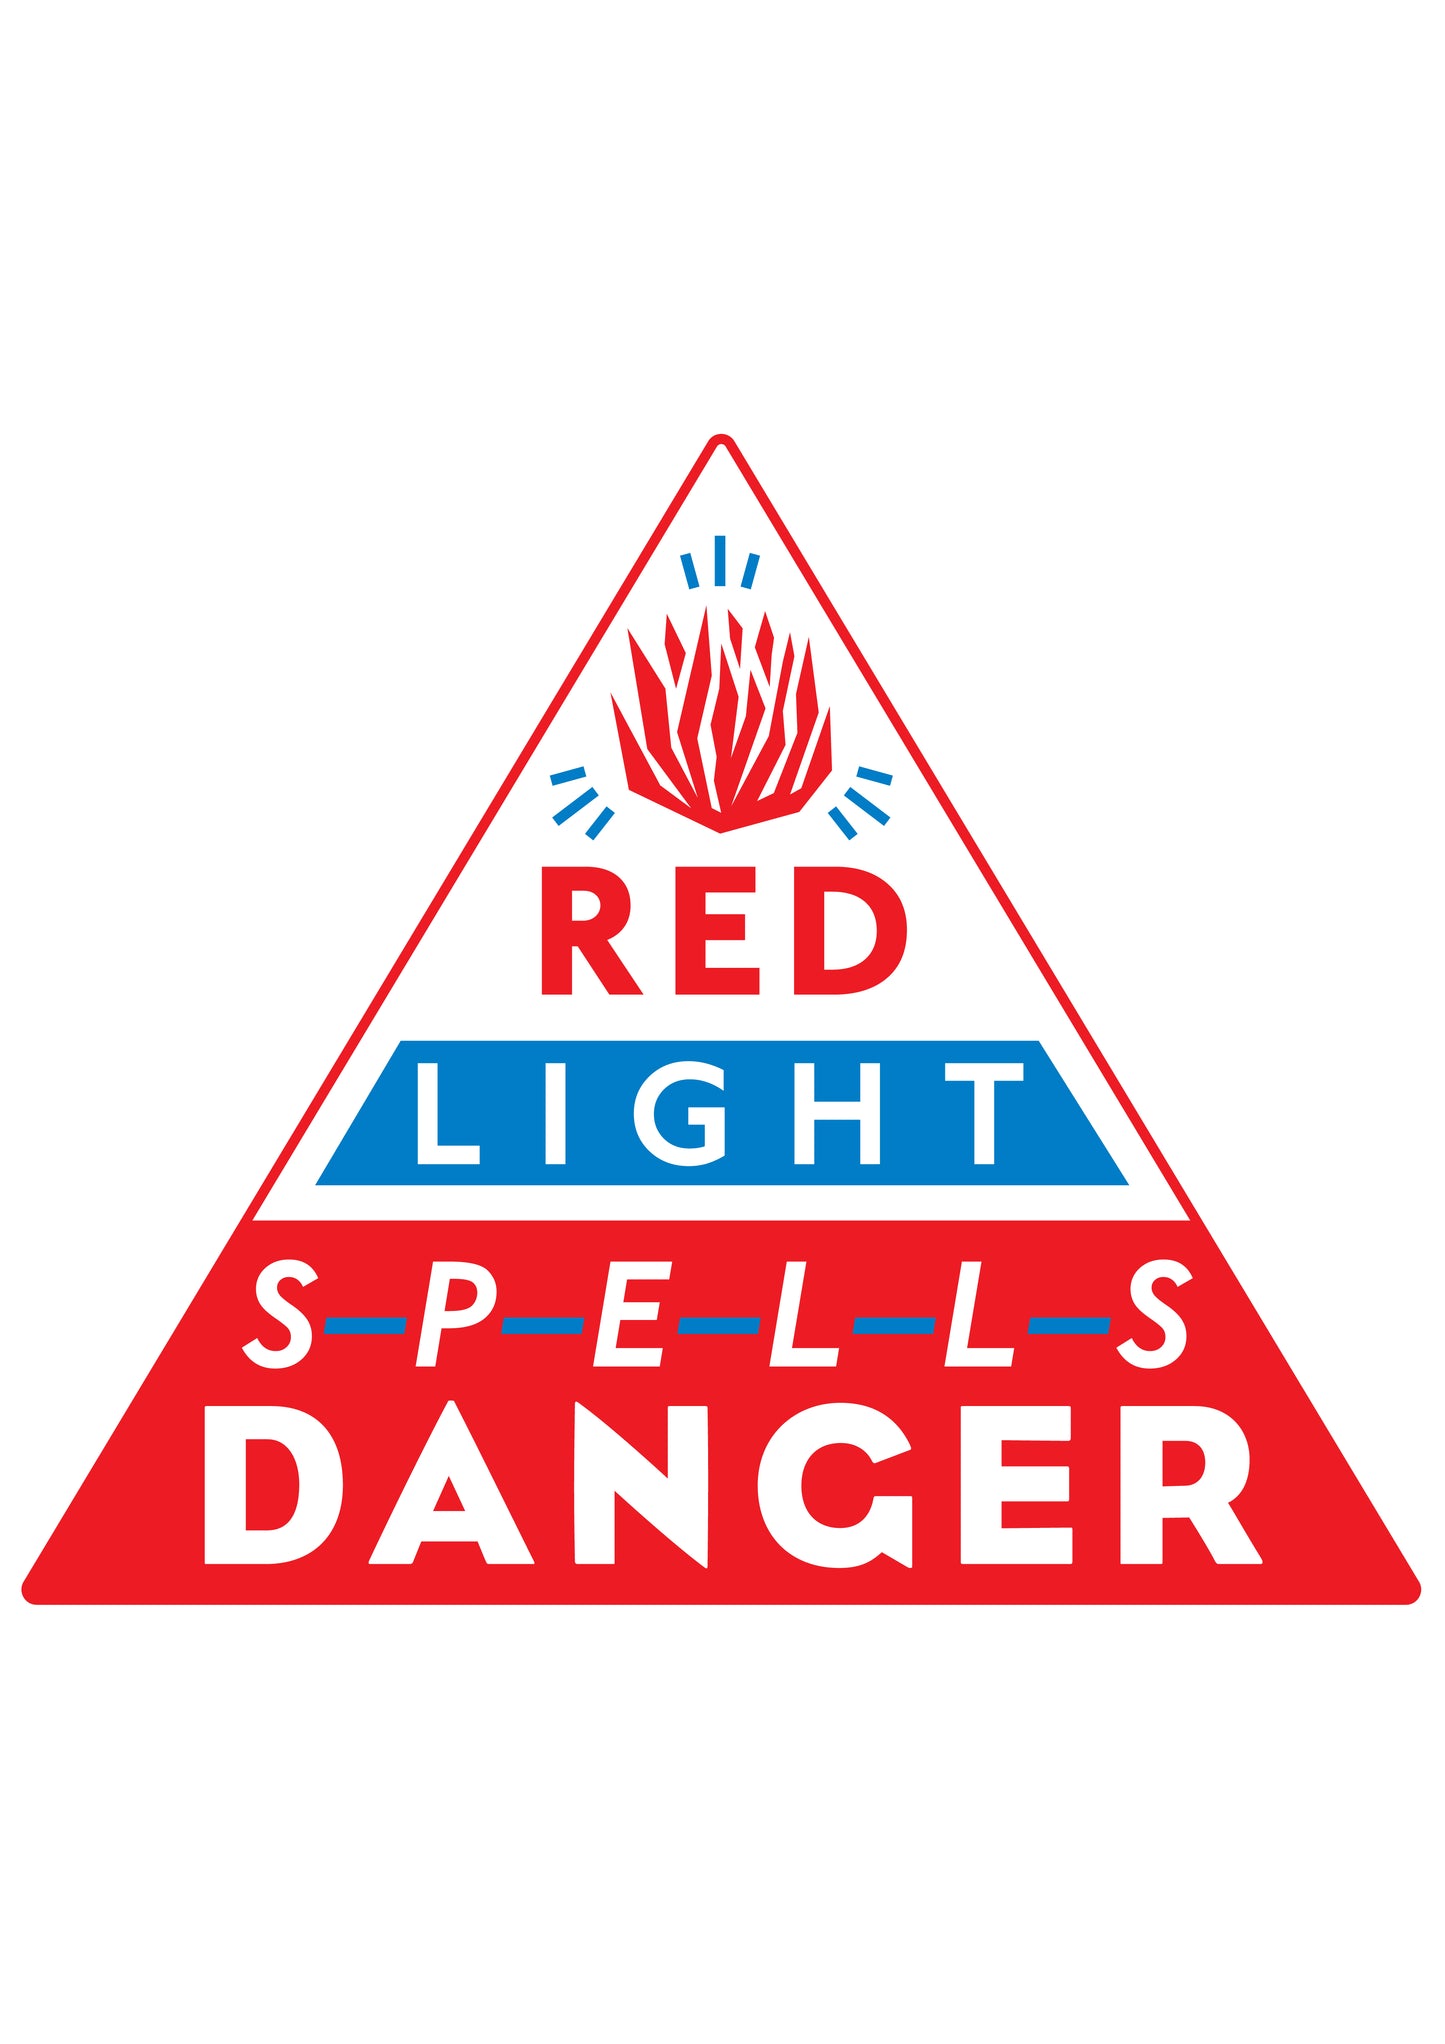 WARNING: Risk of Fire Pictogram by Crispin Finn